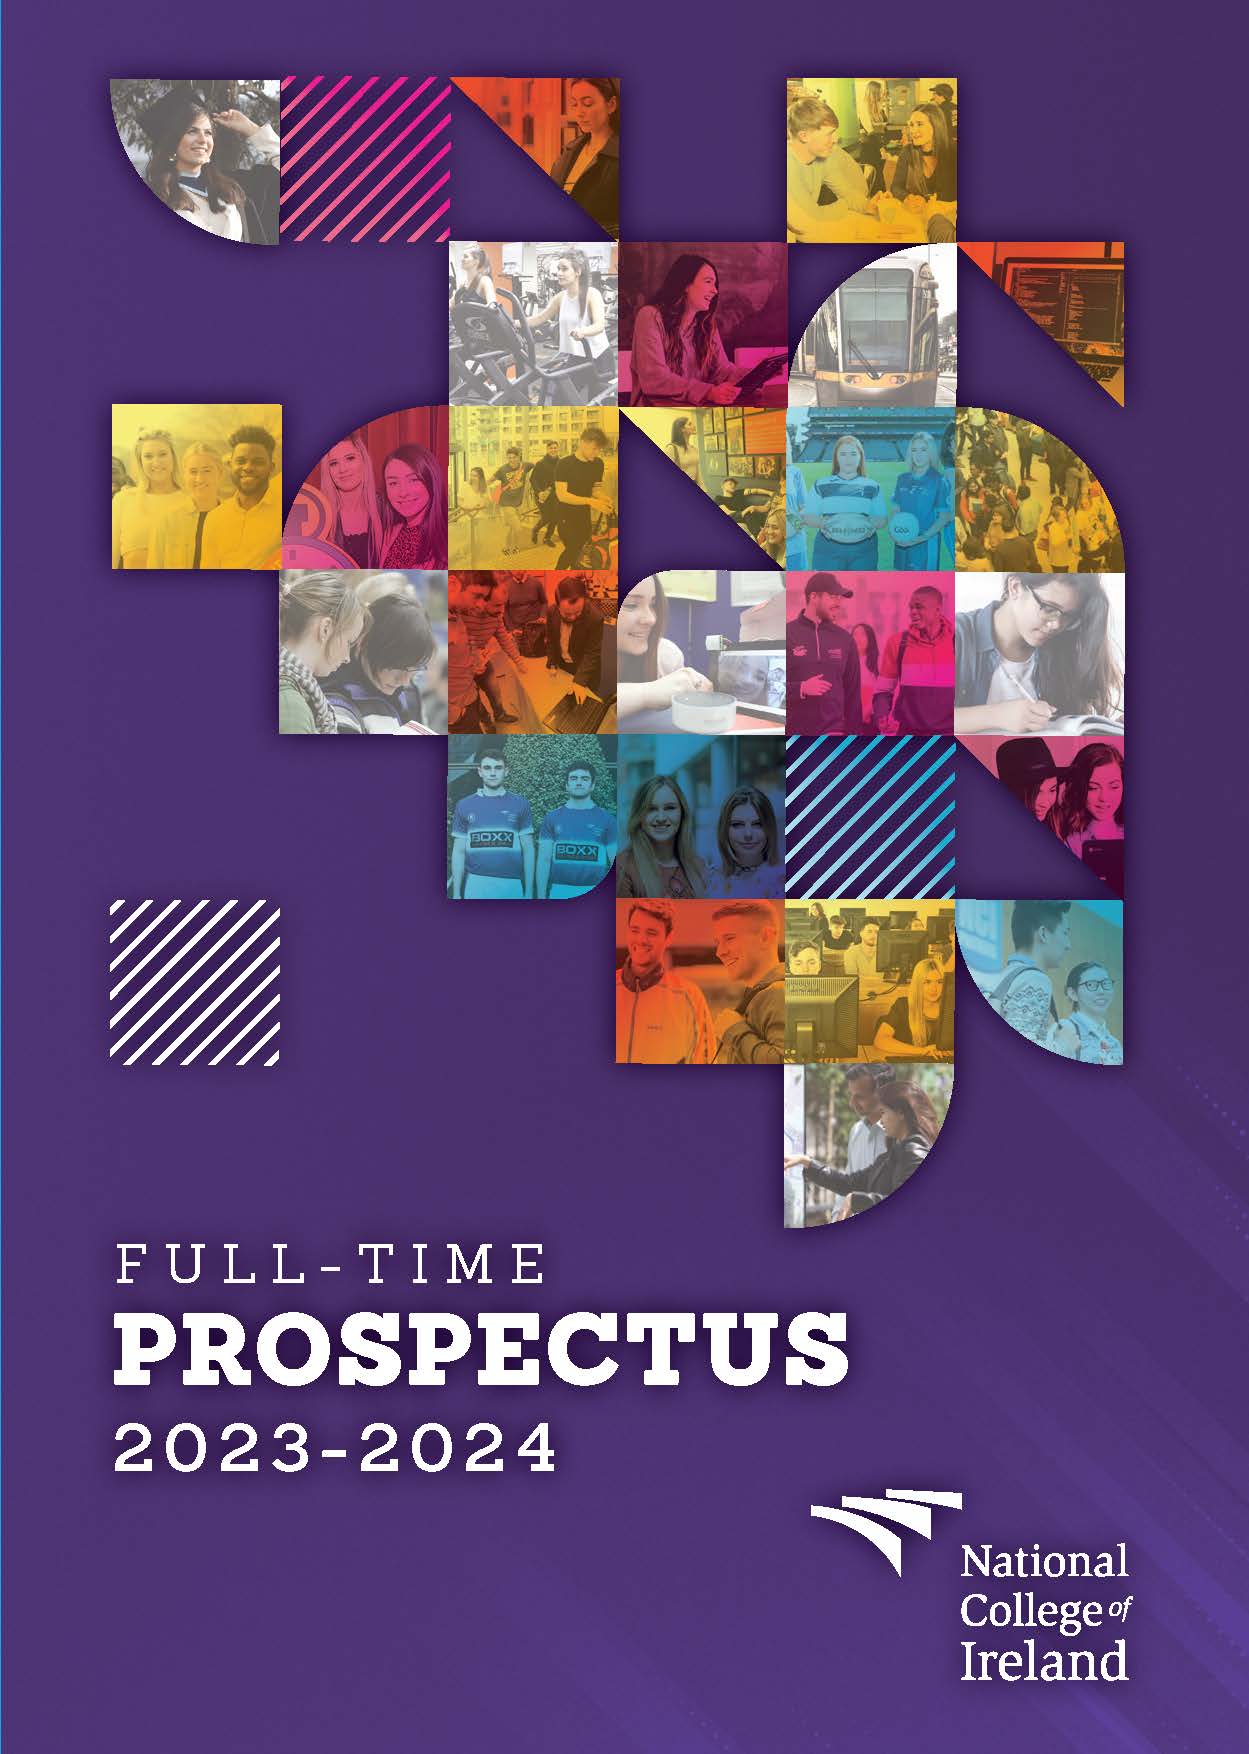 Full-Time Prospectus at NCI brochure cover